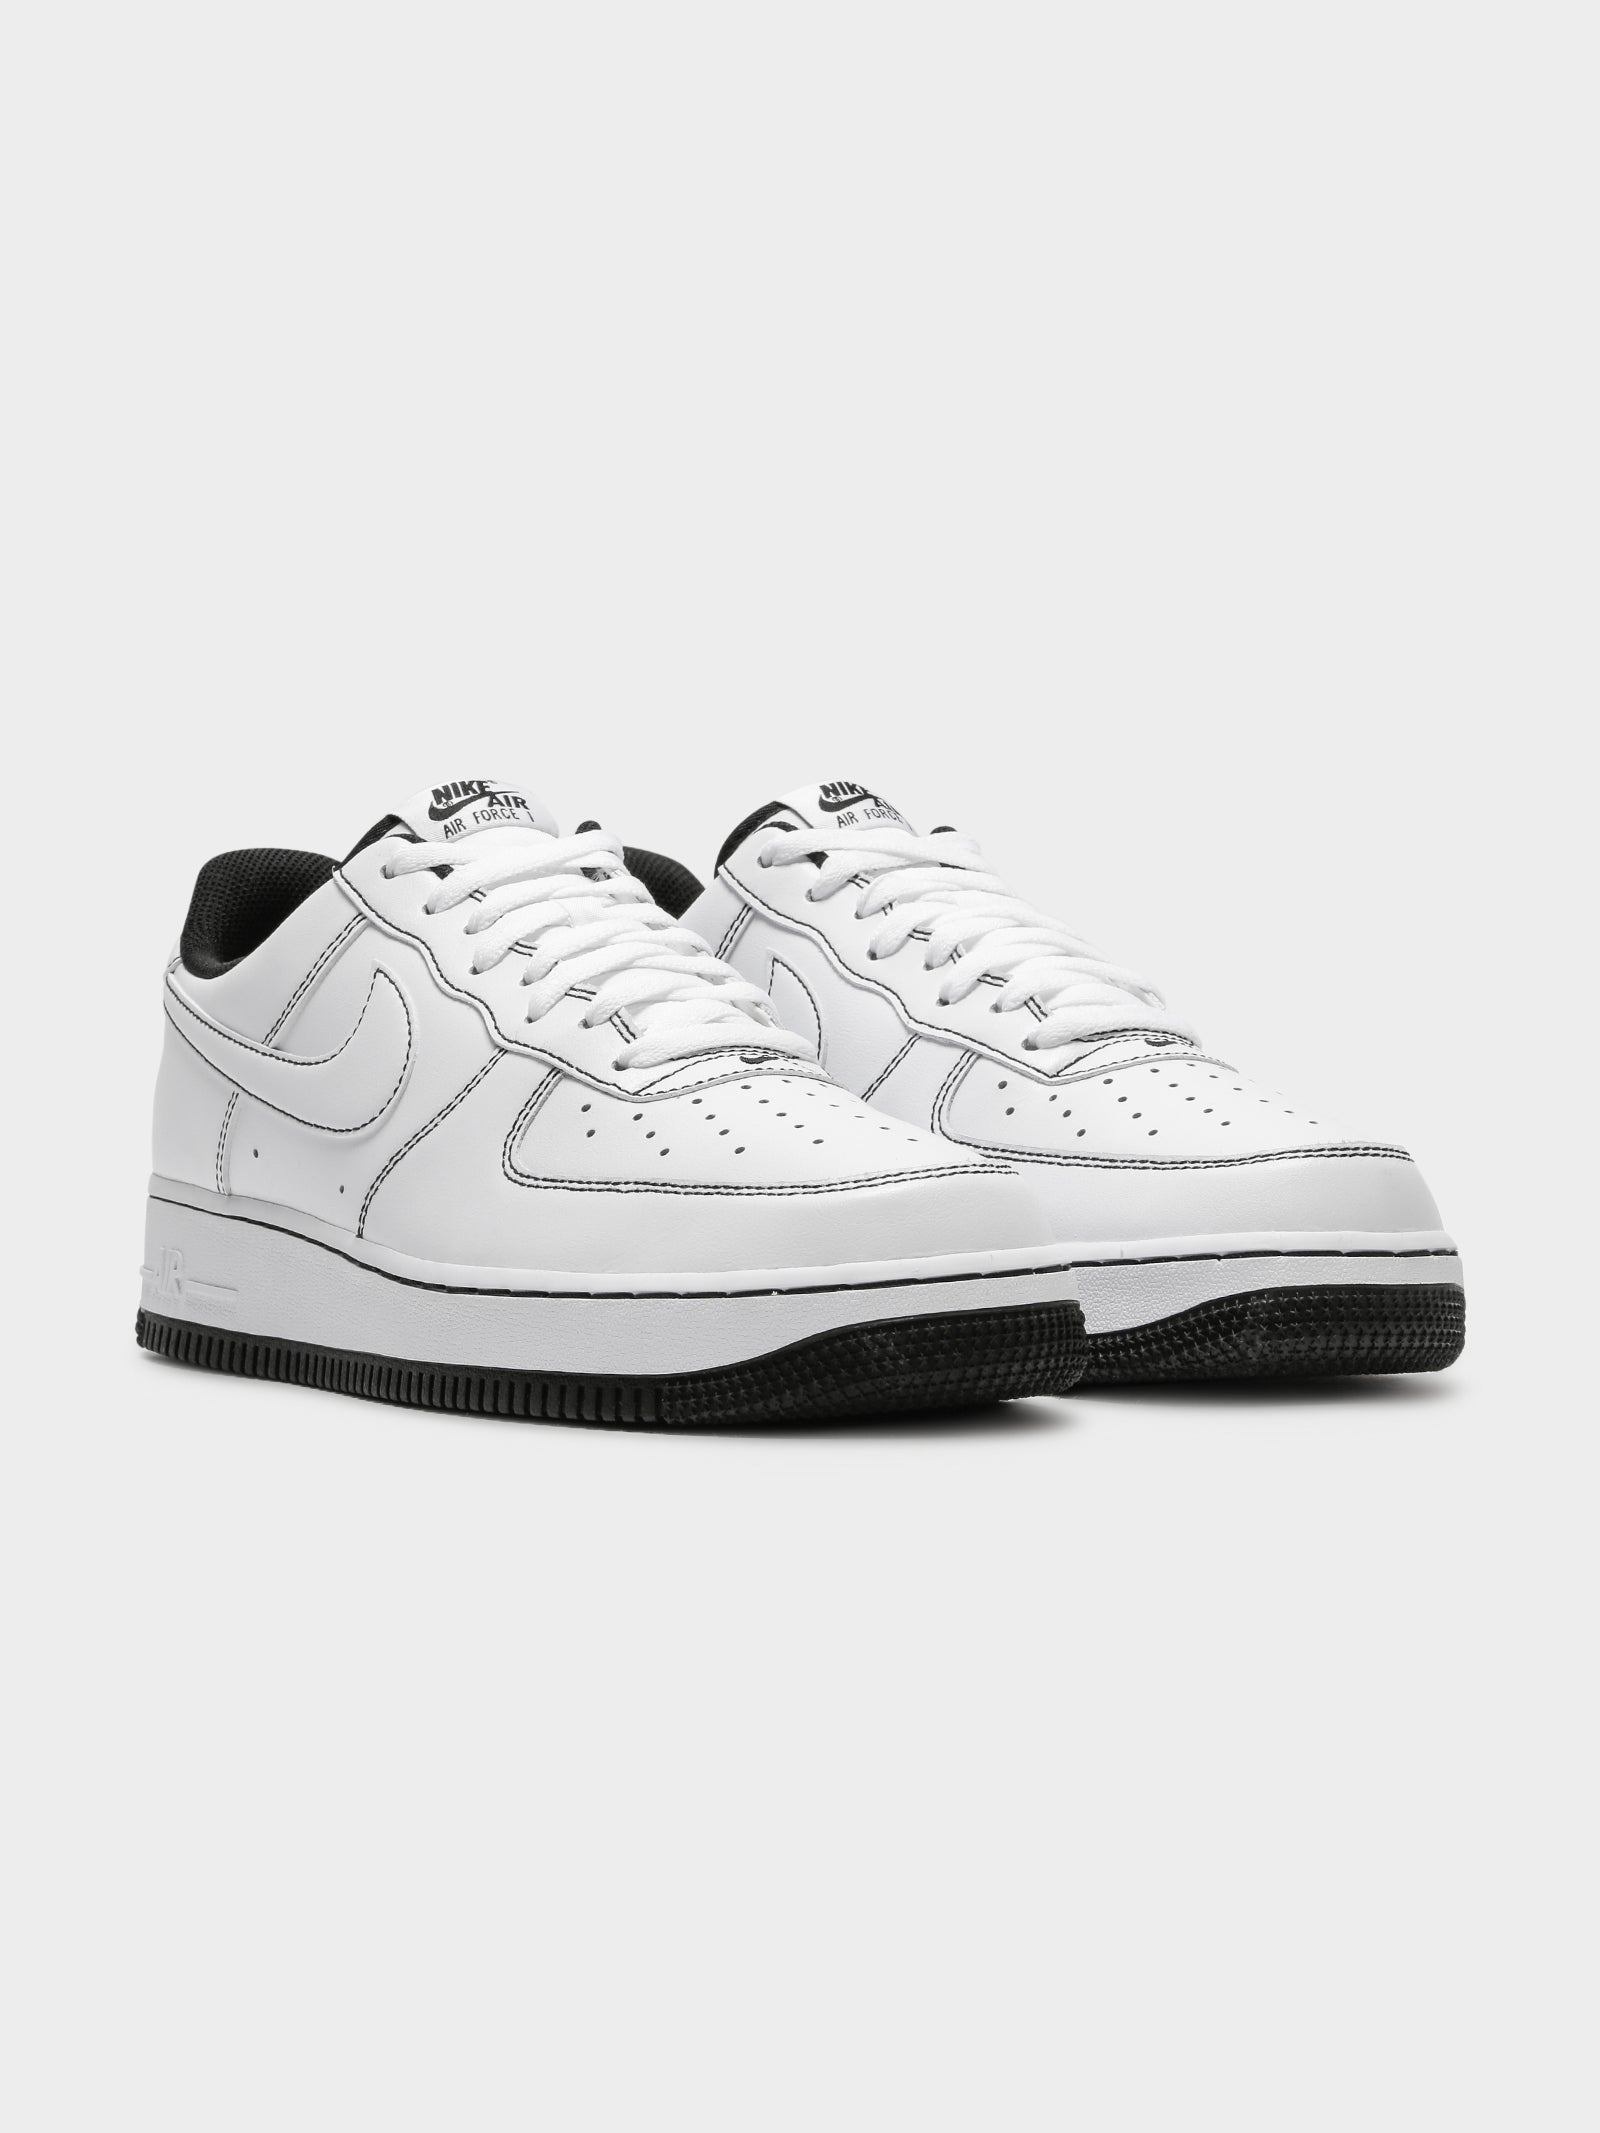 Mens Air Force 1 '07 Sneakers in White & Black